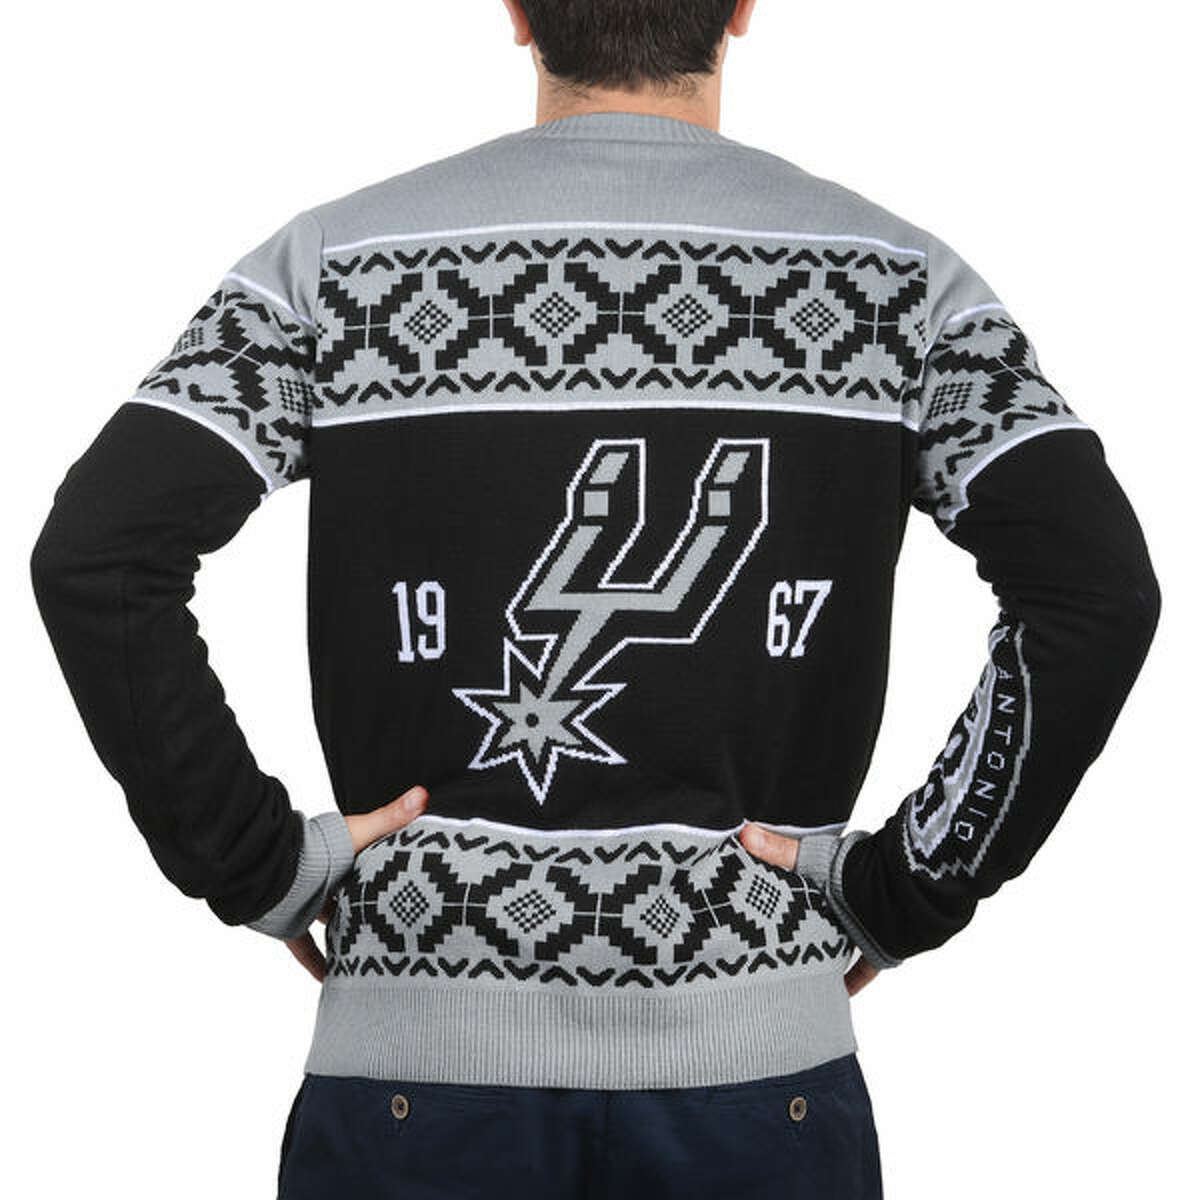 LA Kings - Winning best holiday sweater every year 🤝